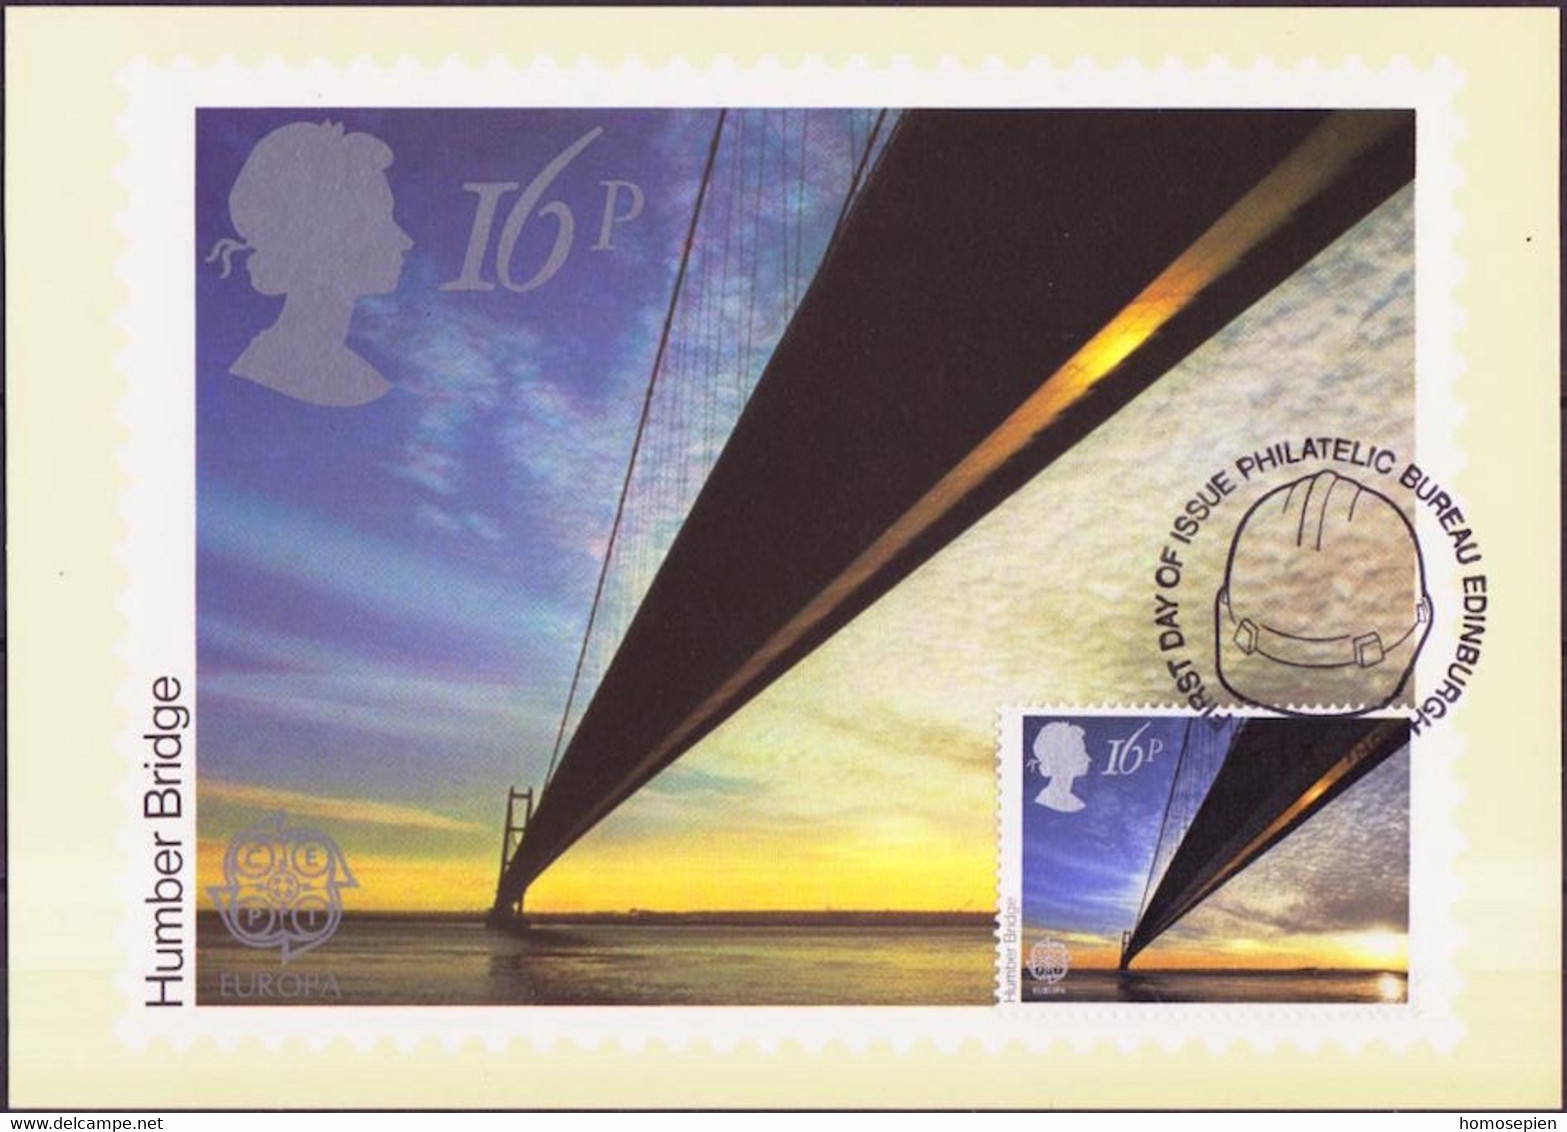 Grande Bretagne - Great Britain - Großbritannien CM 1983 Y&T N°1091 - Michel N°953 - 16p EUROPA - Maximumkaarten